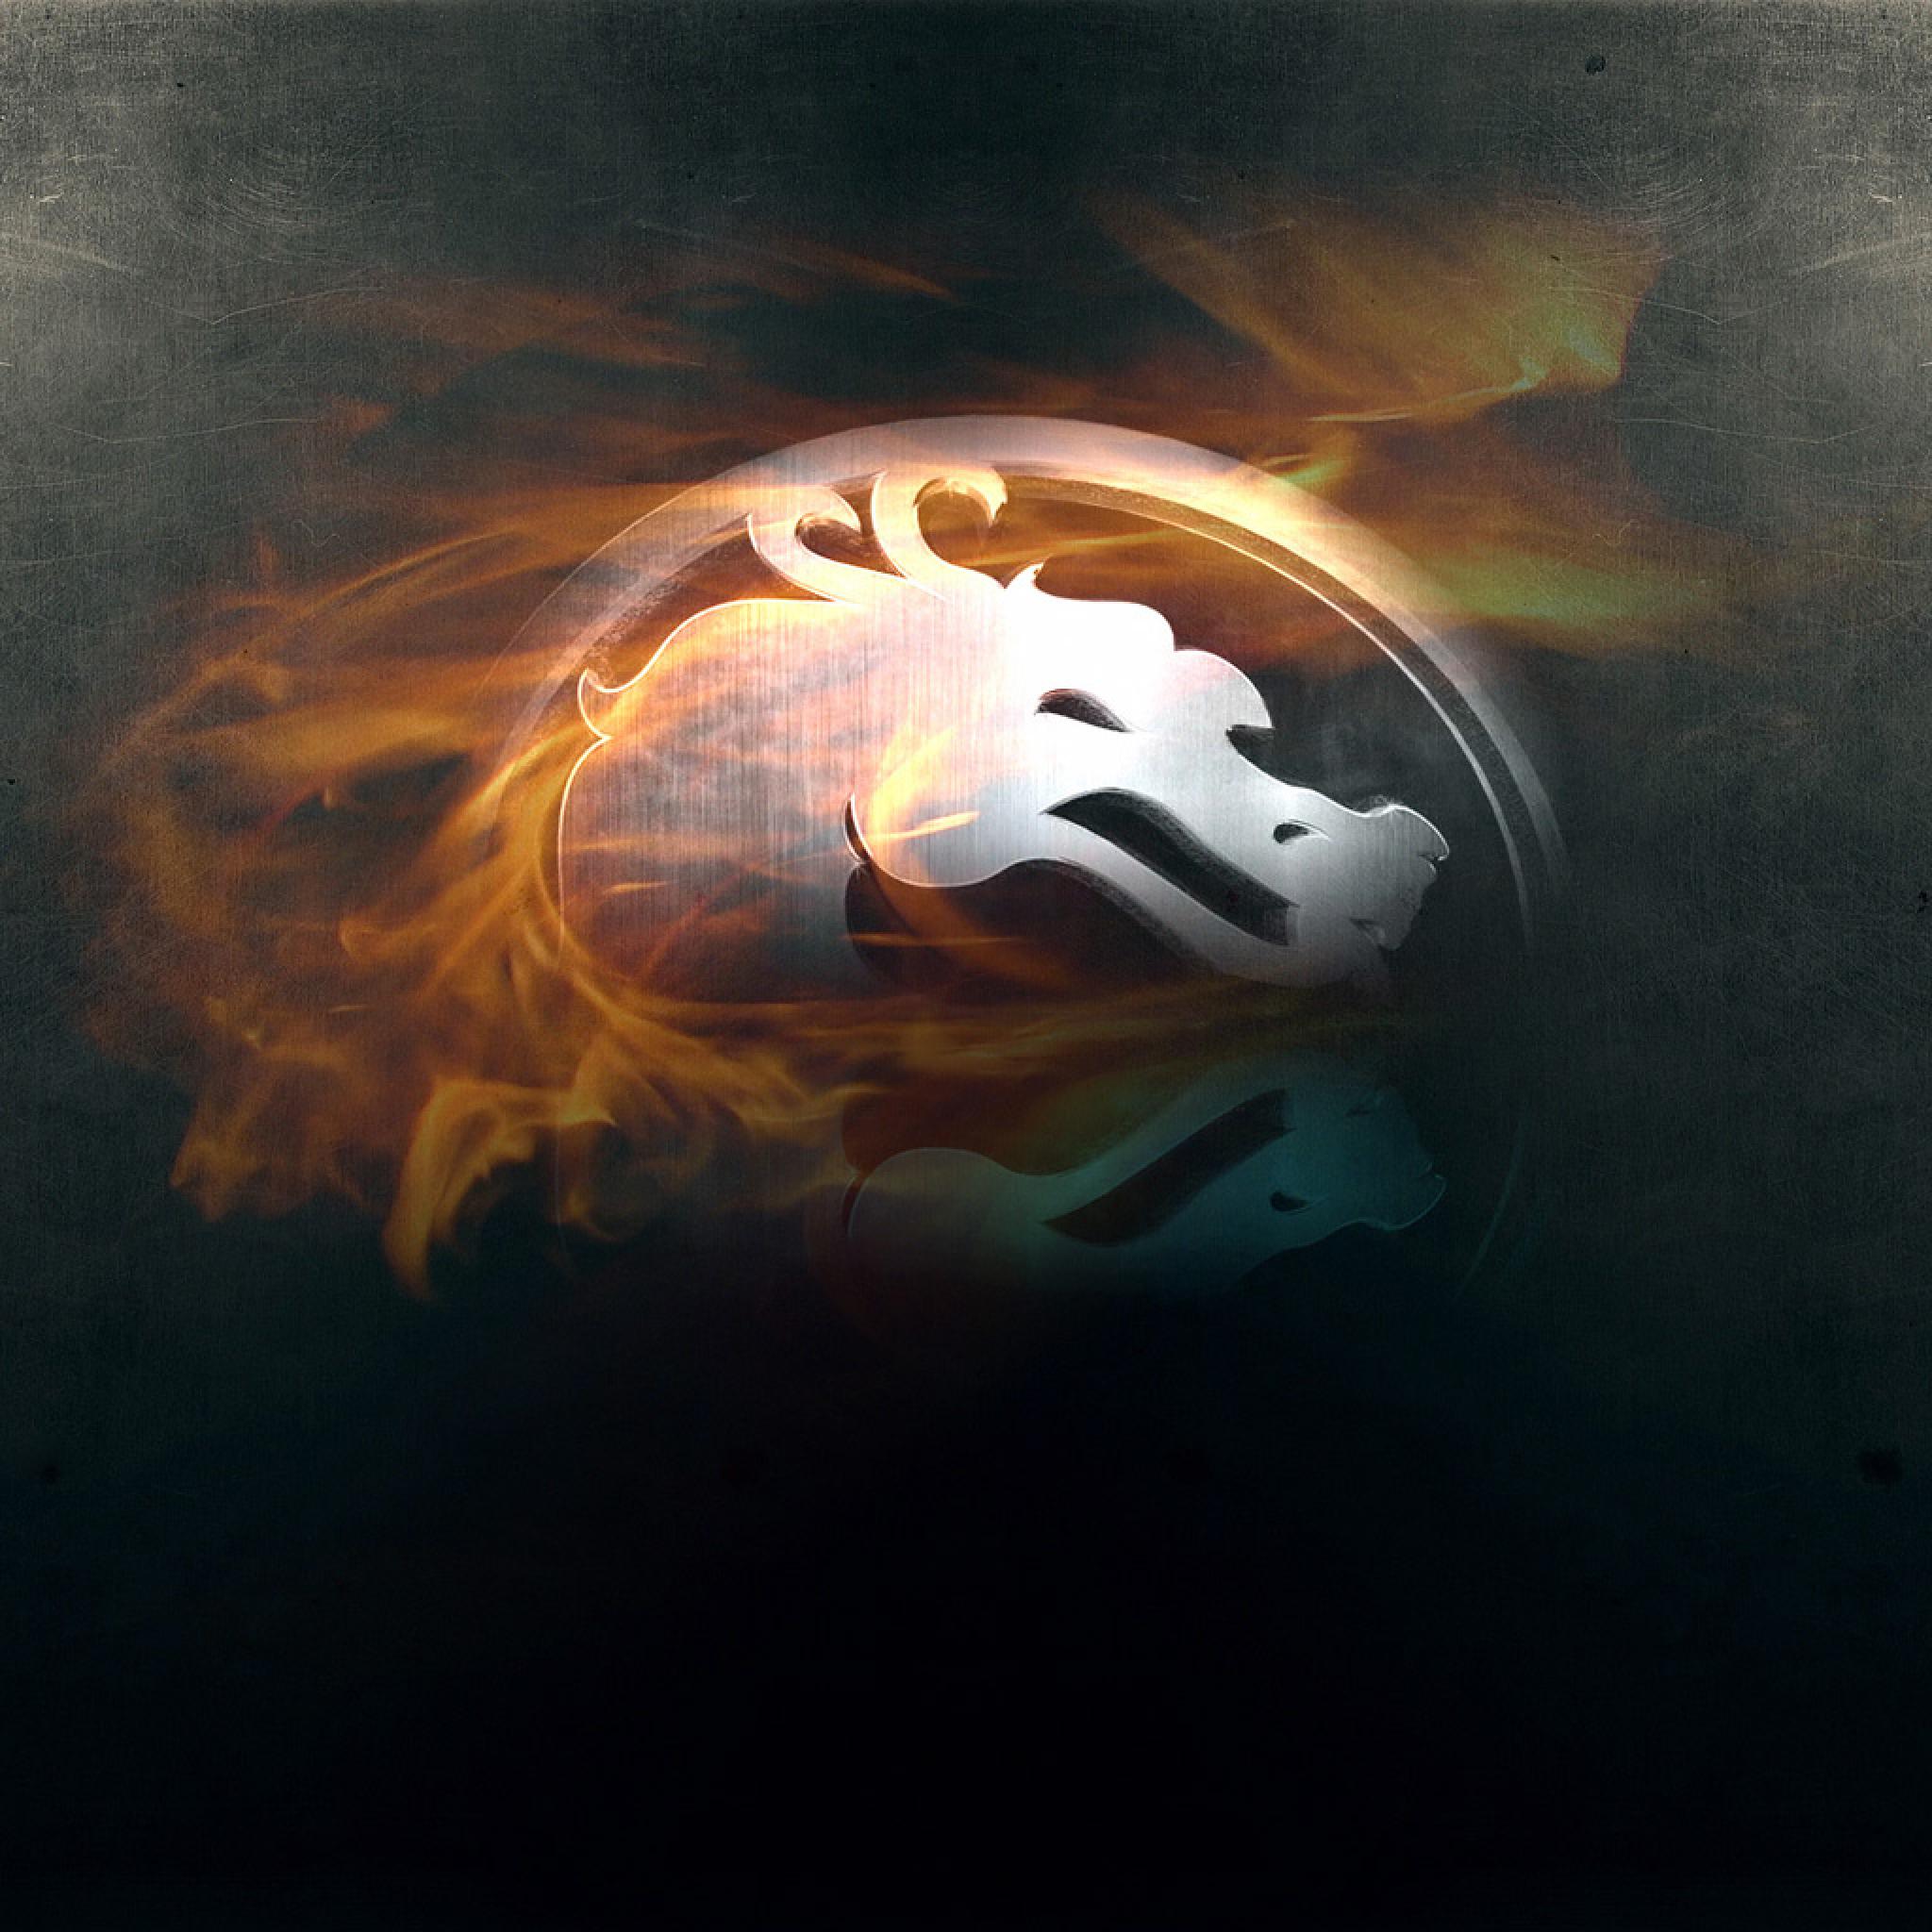 Mortal Kombat Logo